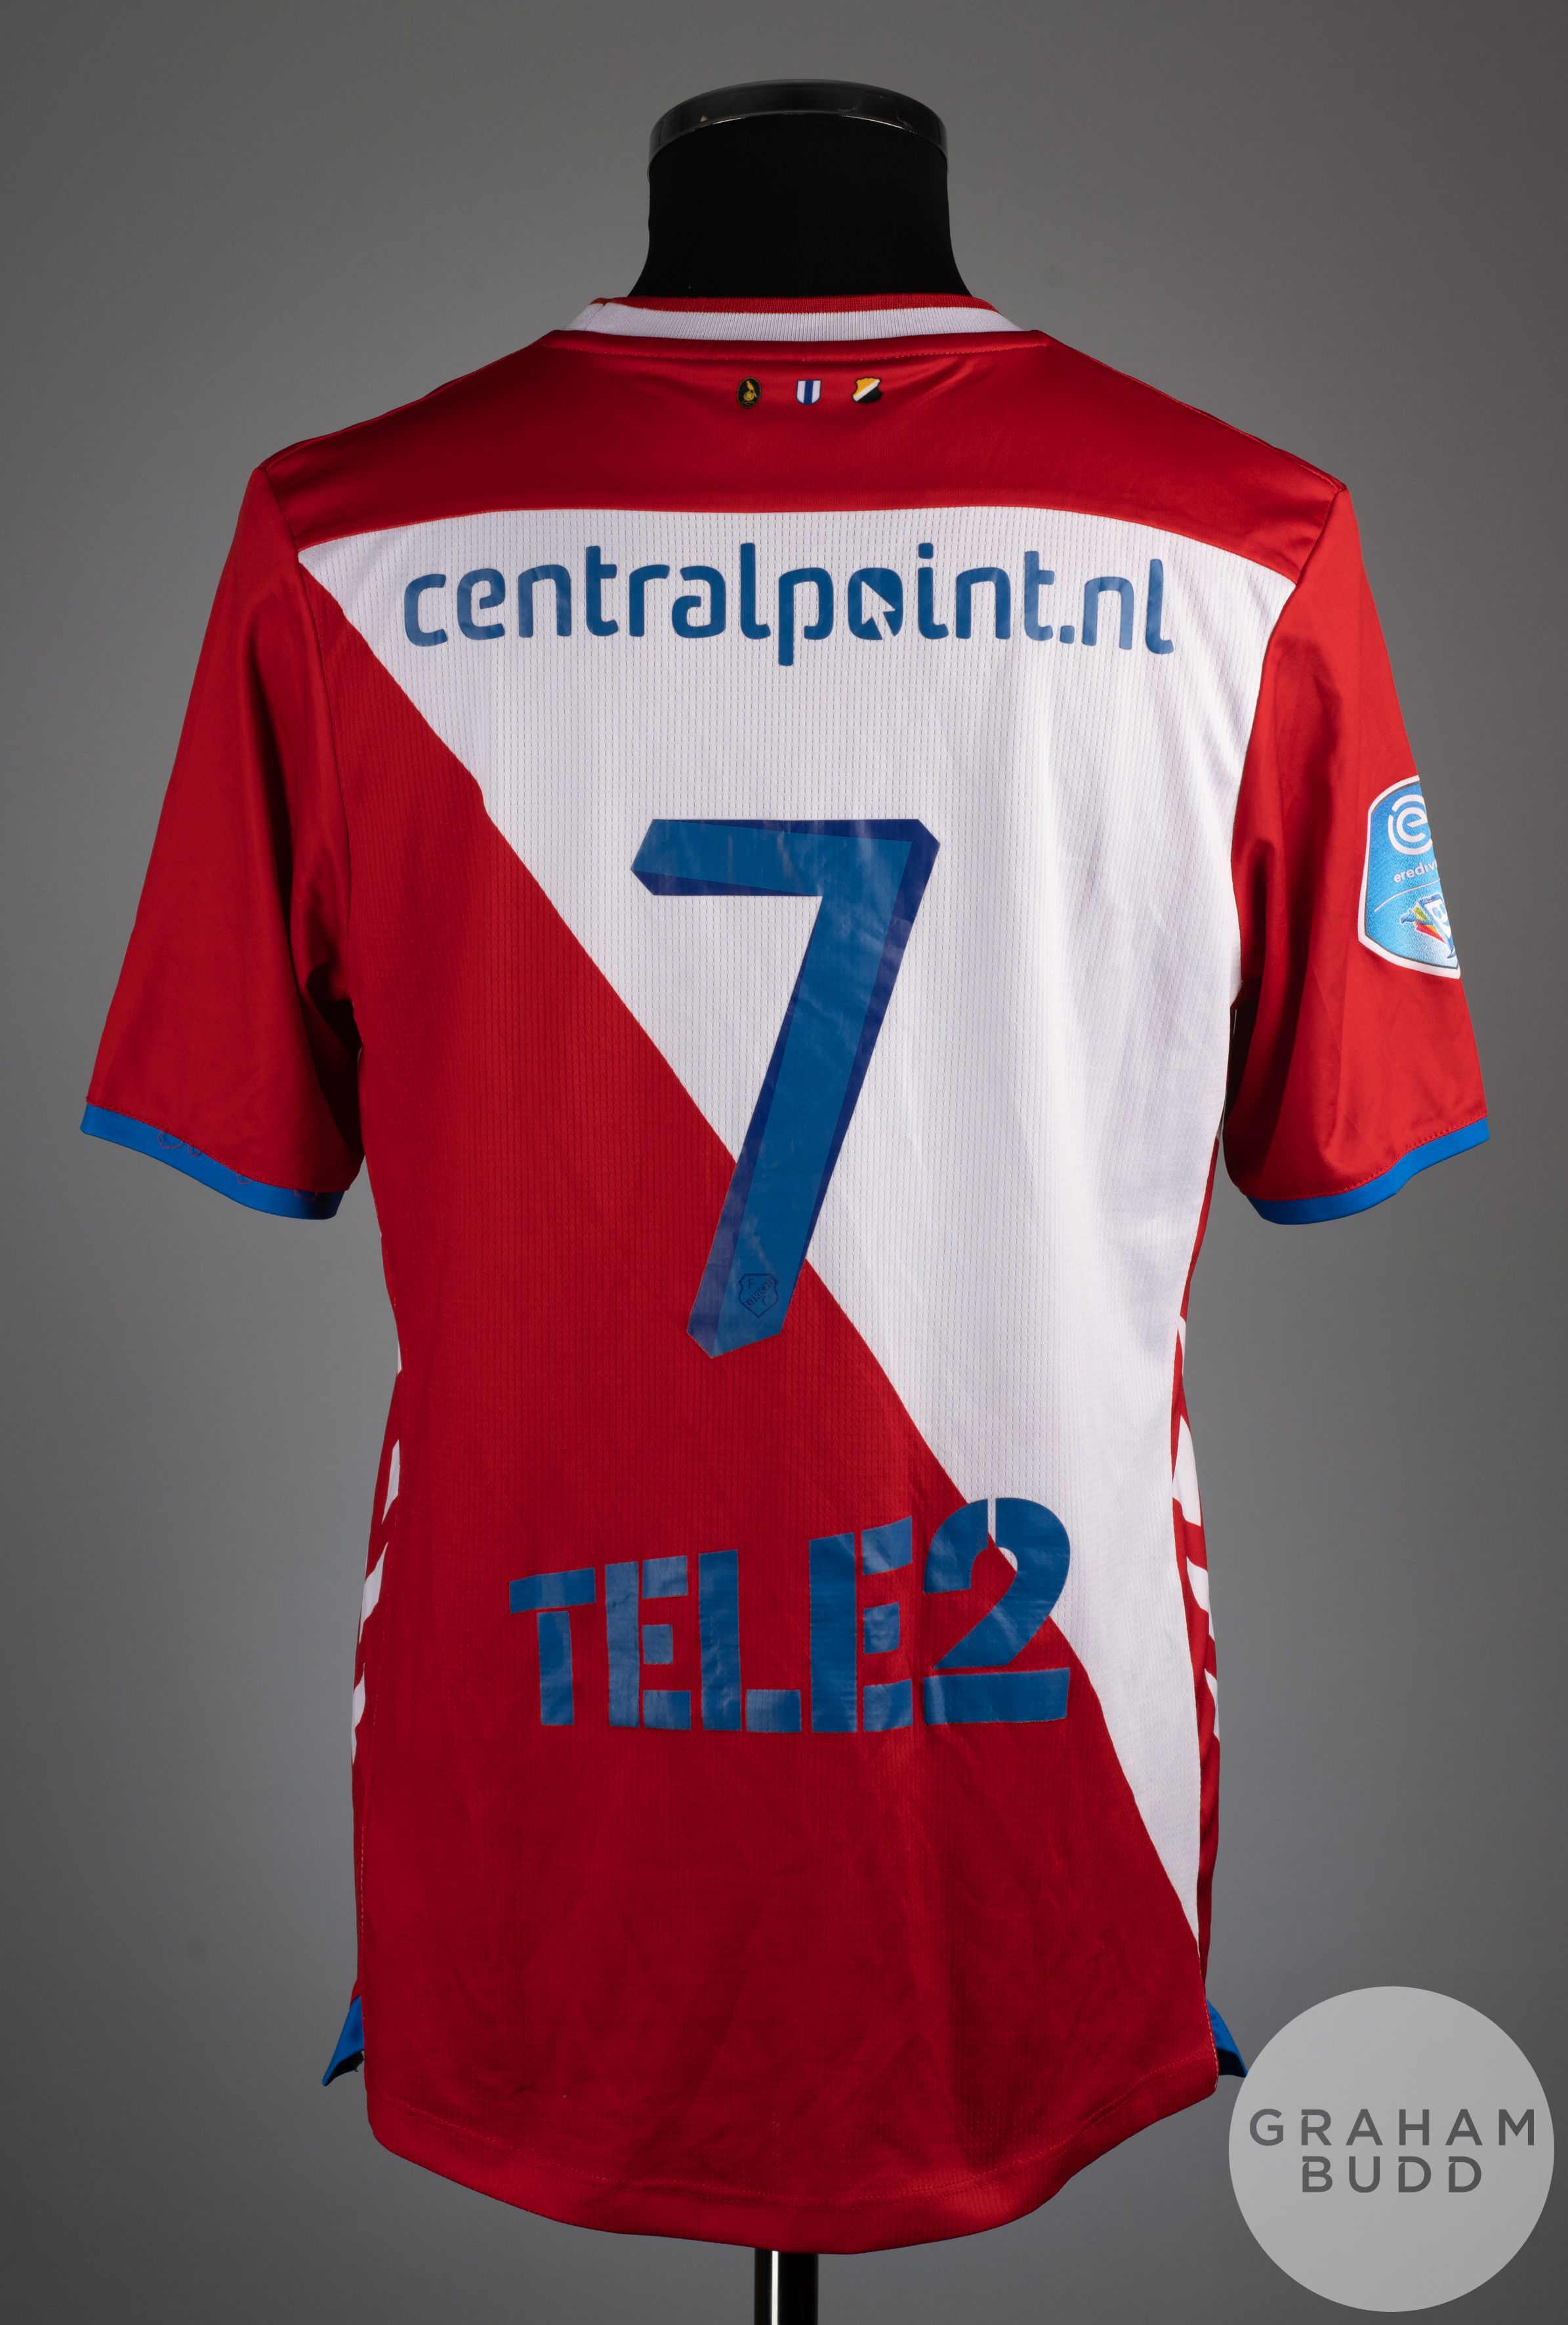 Gyrano Kerk squad signed red No.7 Utrecht short sleeved shirt - Image 2 of 2